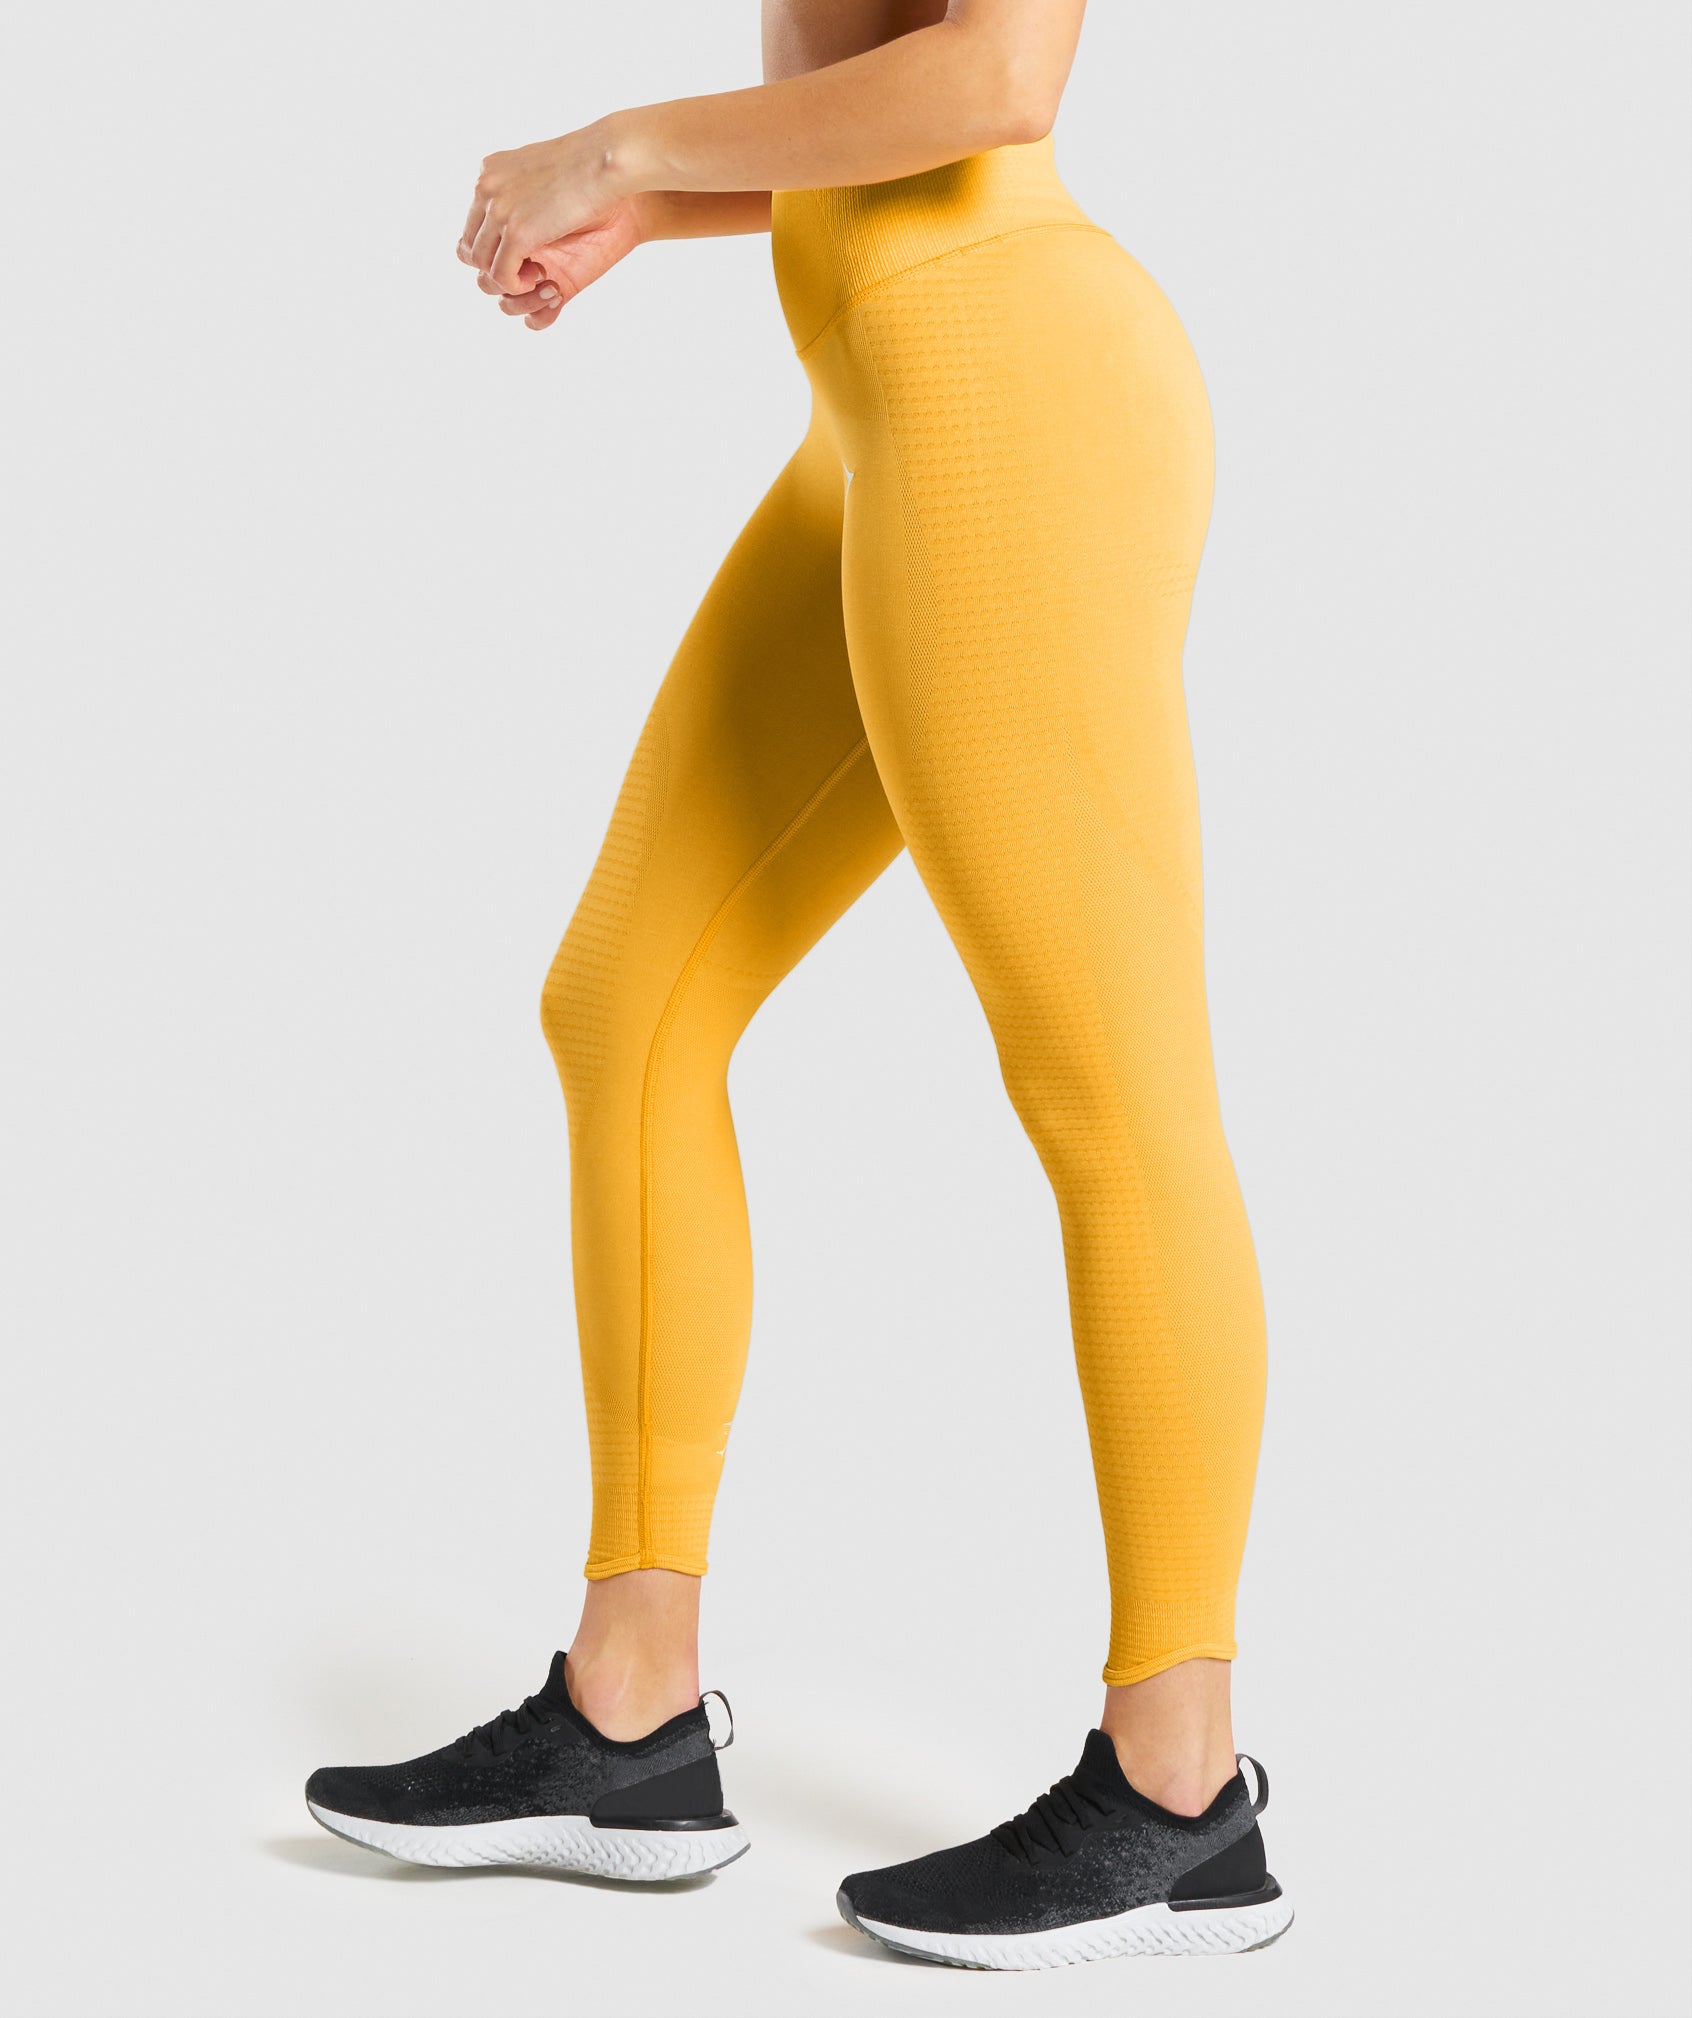 Gymshark Flex Low Rise Leggings - Charcoal Marl/Glitch Yellow